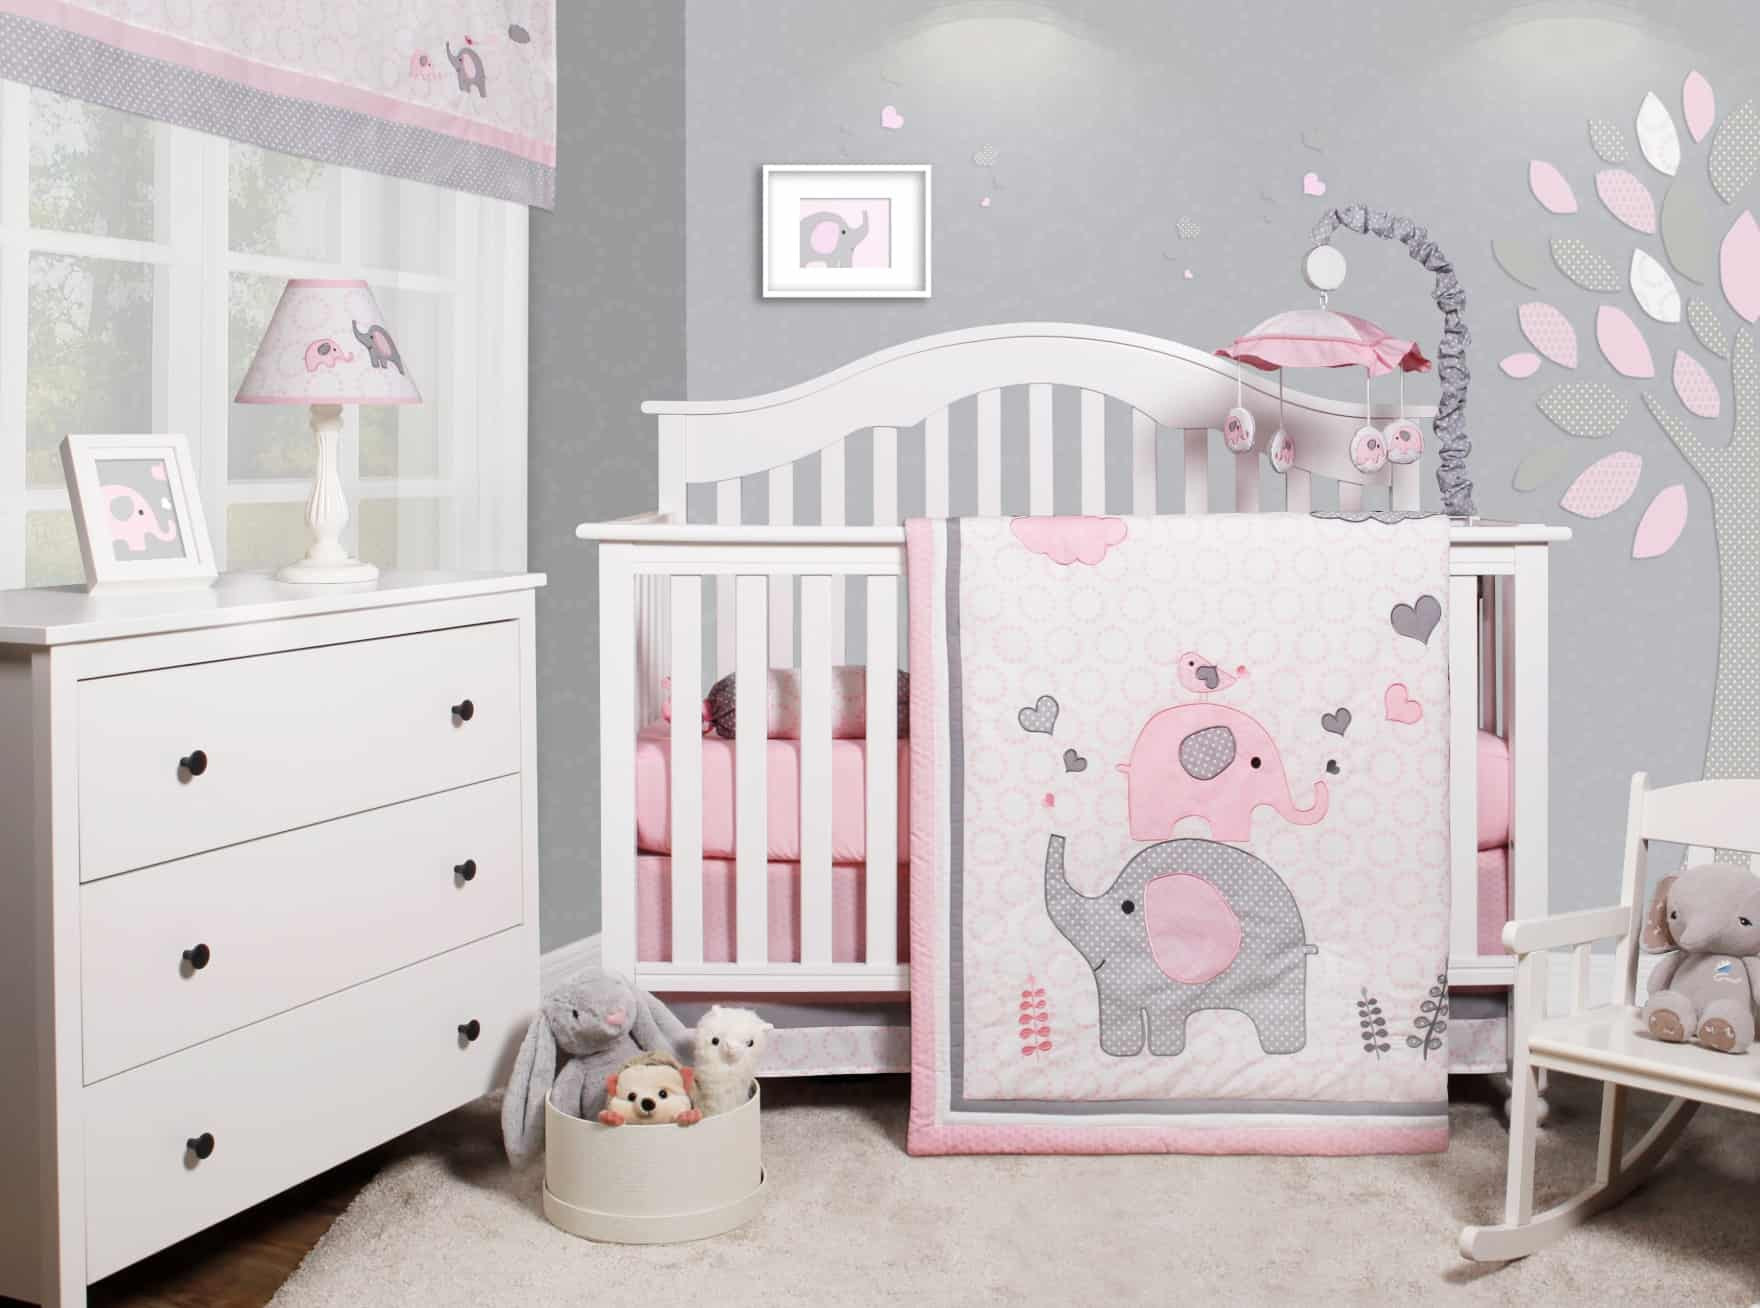 Baby Girl Room Decorations Ideas
 20 Cute Baby Girl Room Ideas